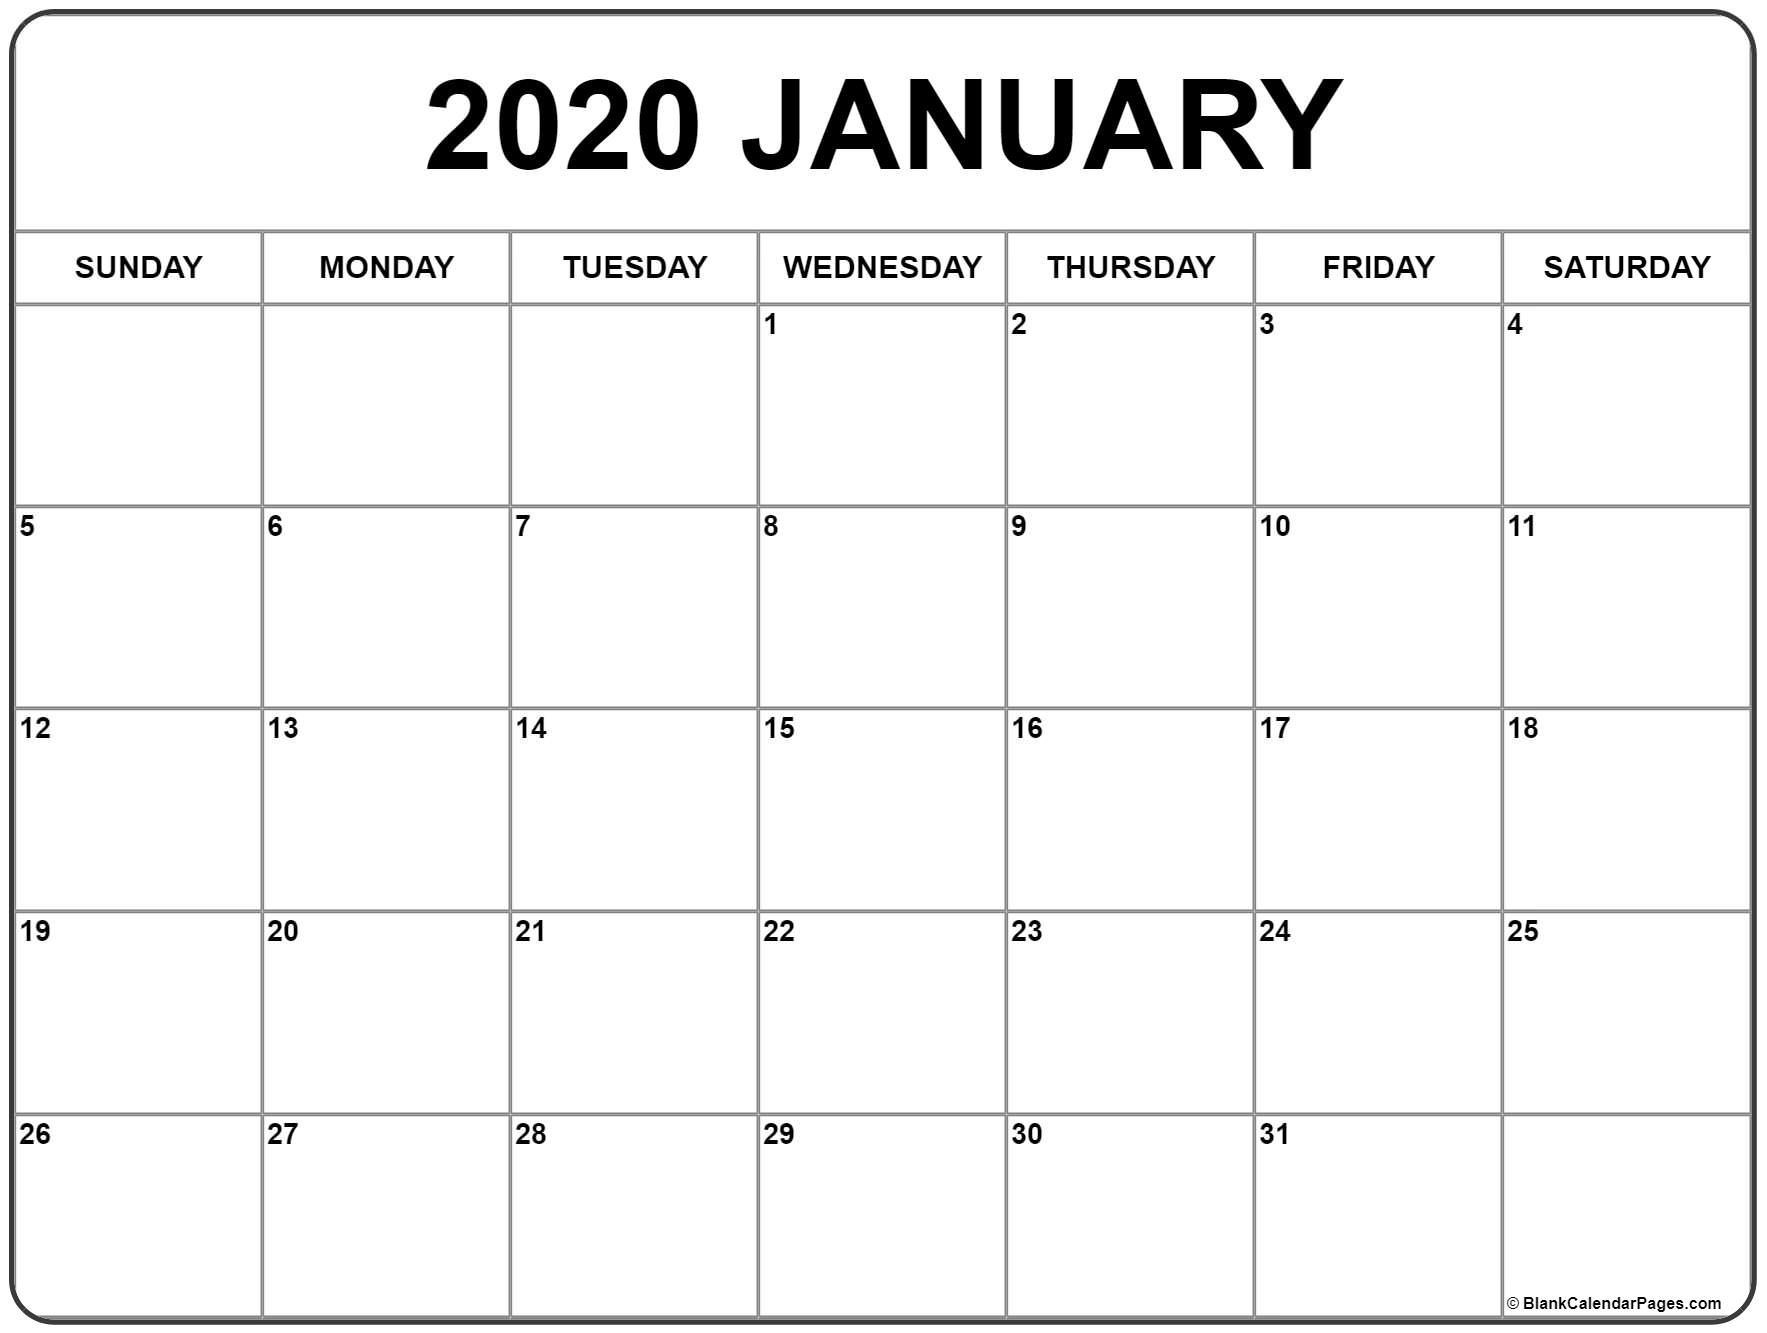 January 2020 Calendar | Free Printable Monthly Calendars  Free Printable Calendar 2020 Monthly